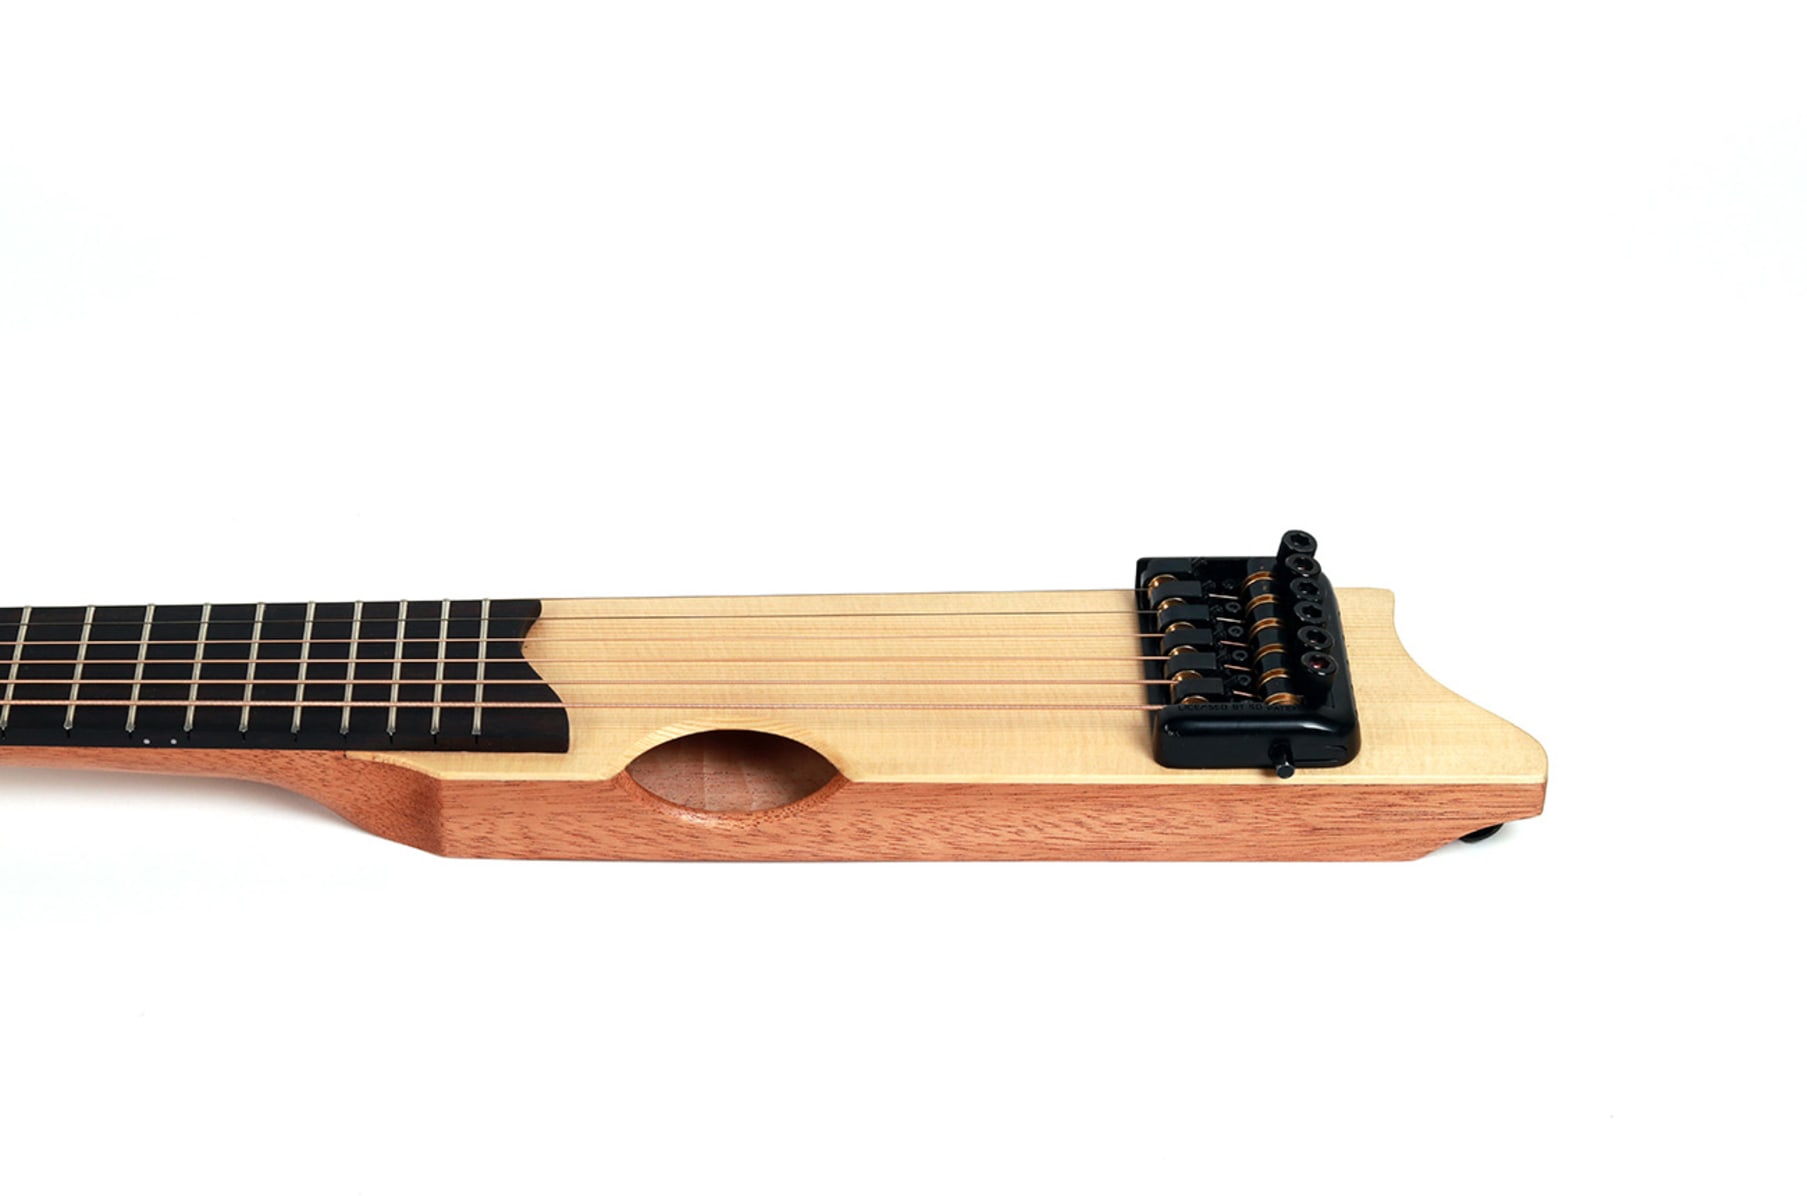 Klang ver.2 - guitar for travelers. | Indiegogo